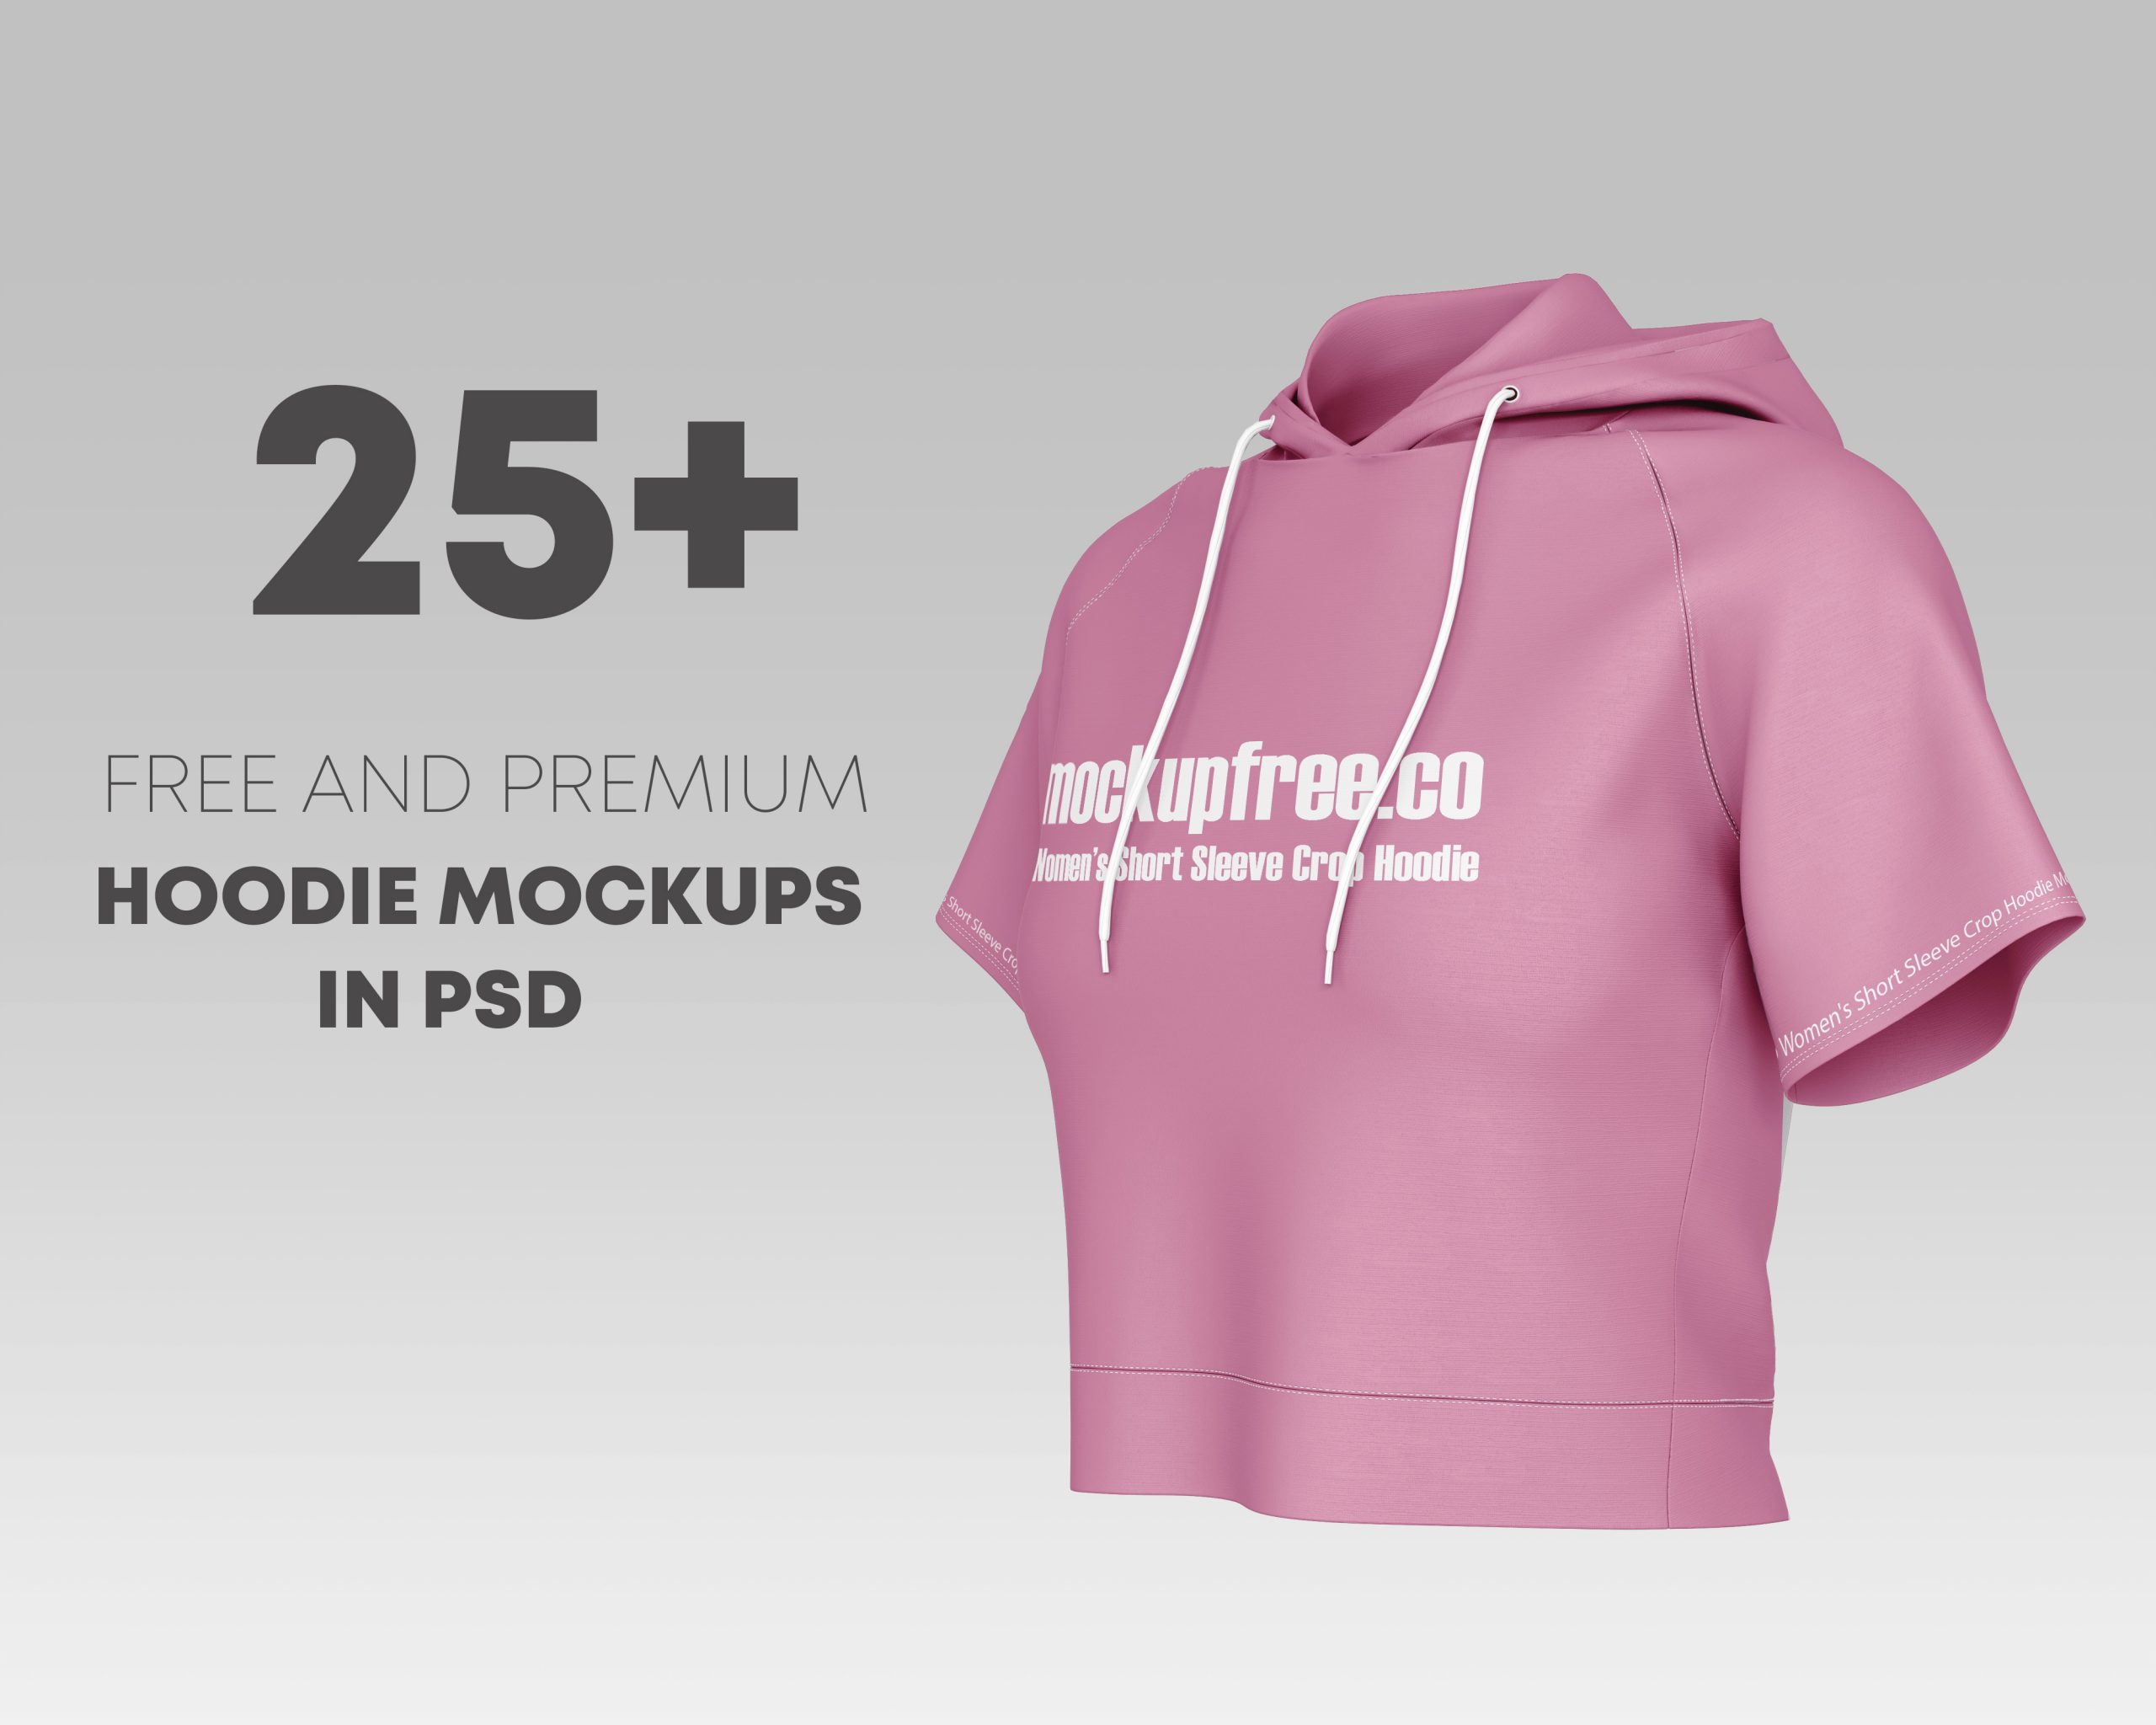 20+ Best Underwear Mockup PSD Templates (FREE & Premium)